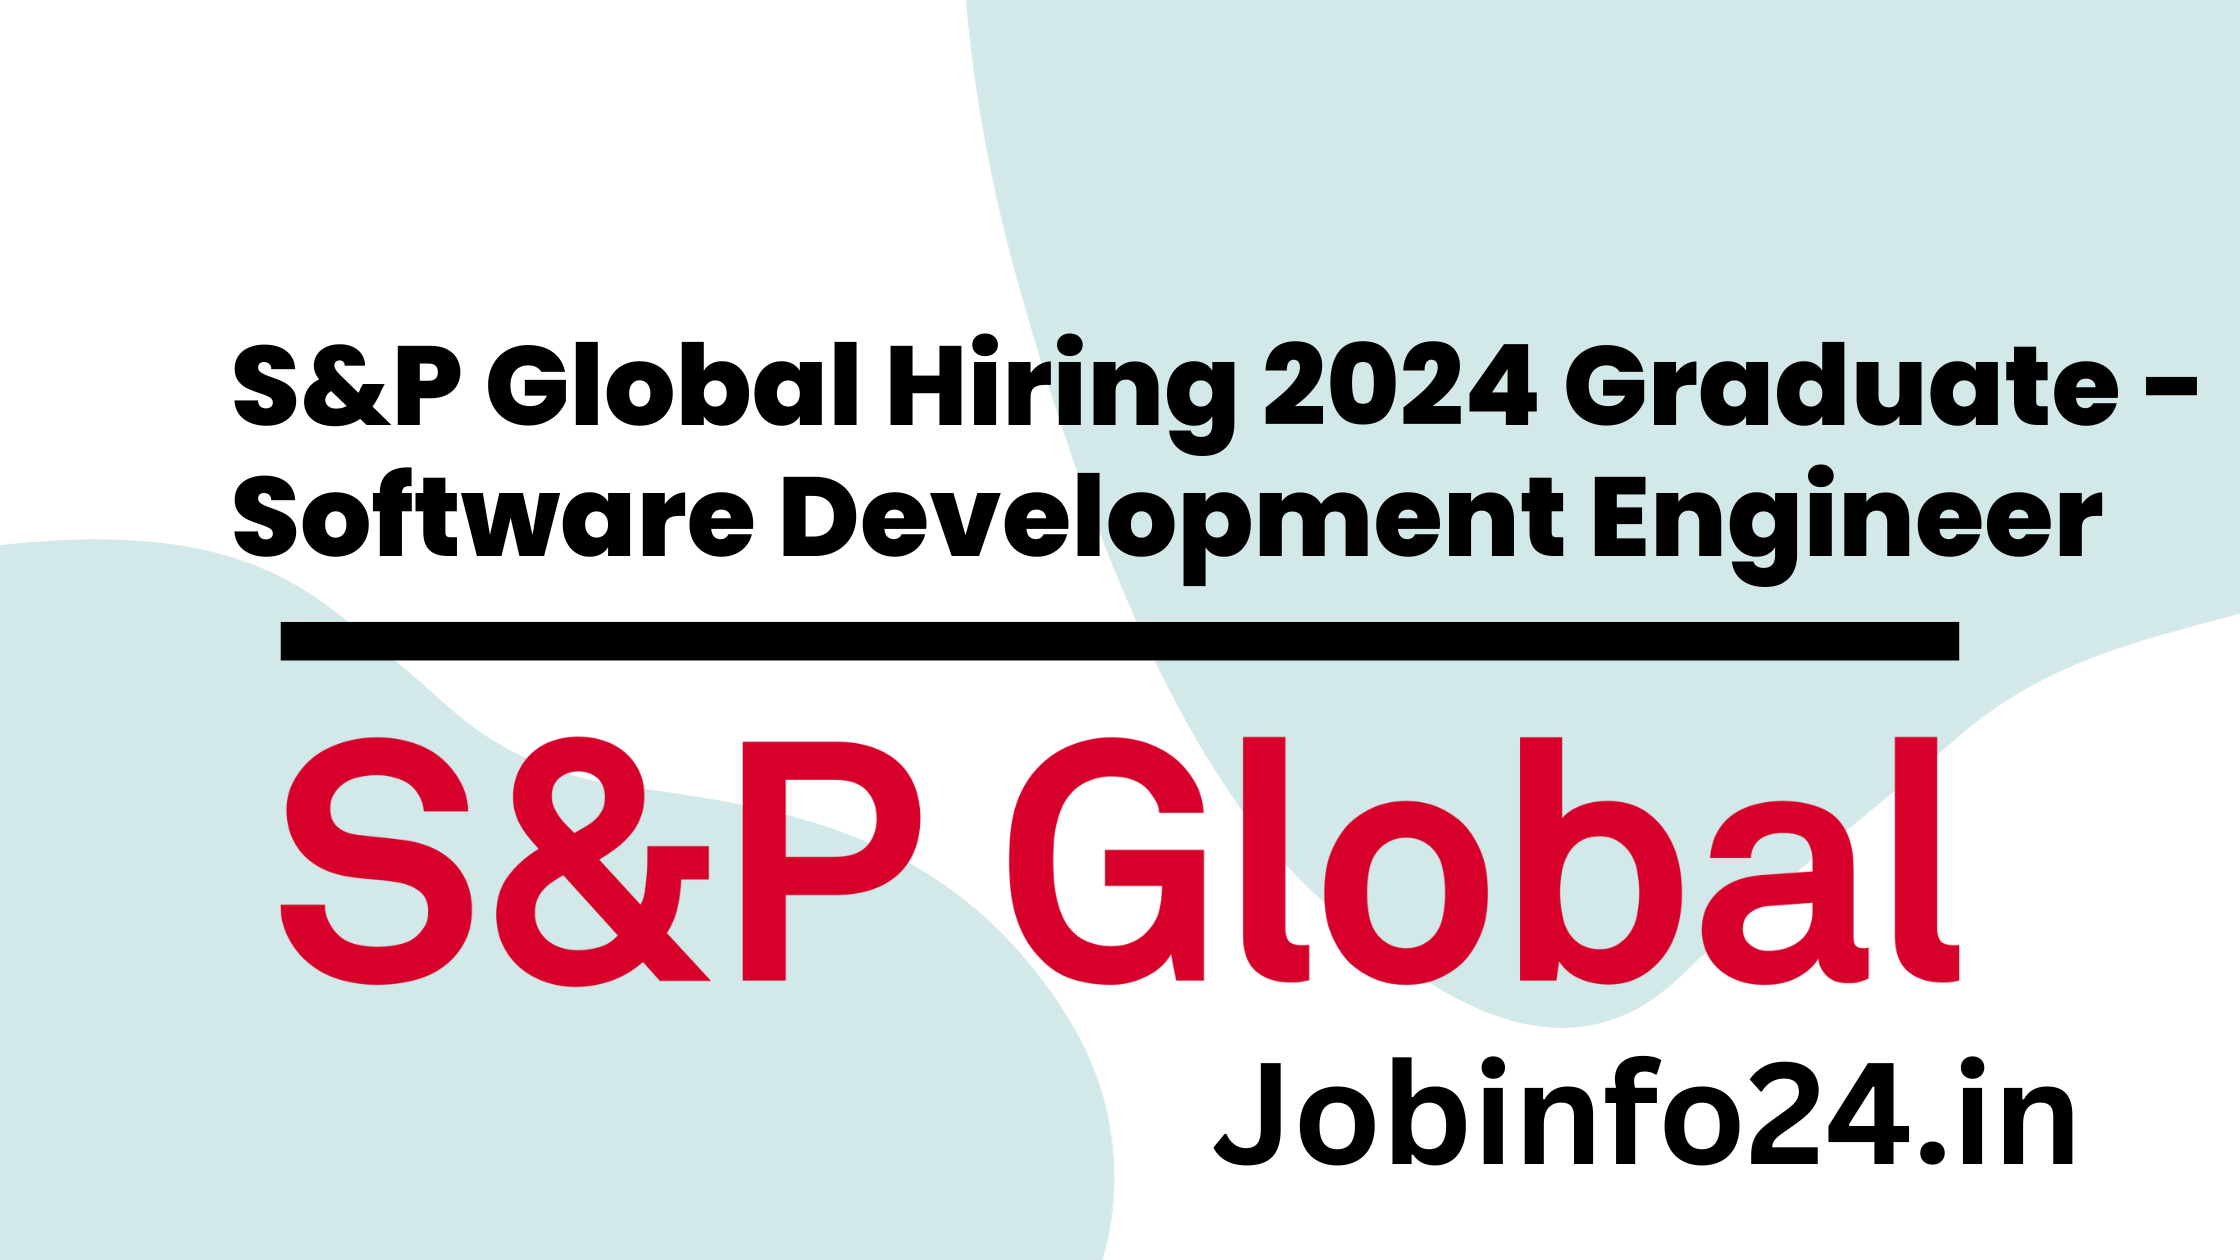 S&P Global Hiring 2024 Graduate - Software Development Engineer